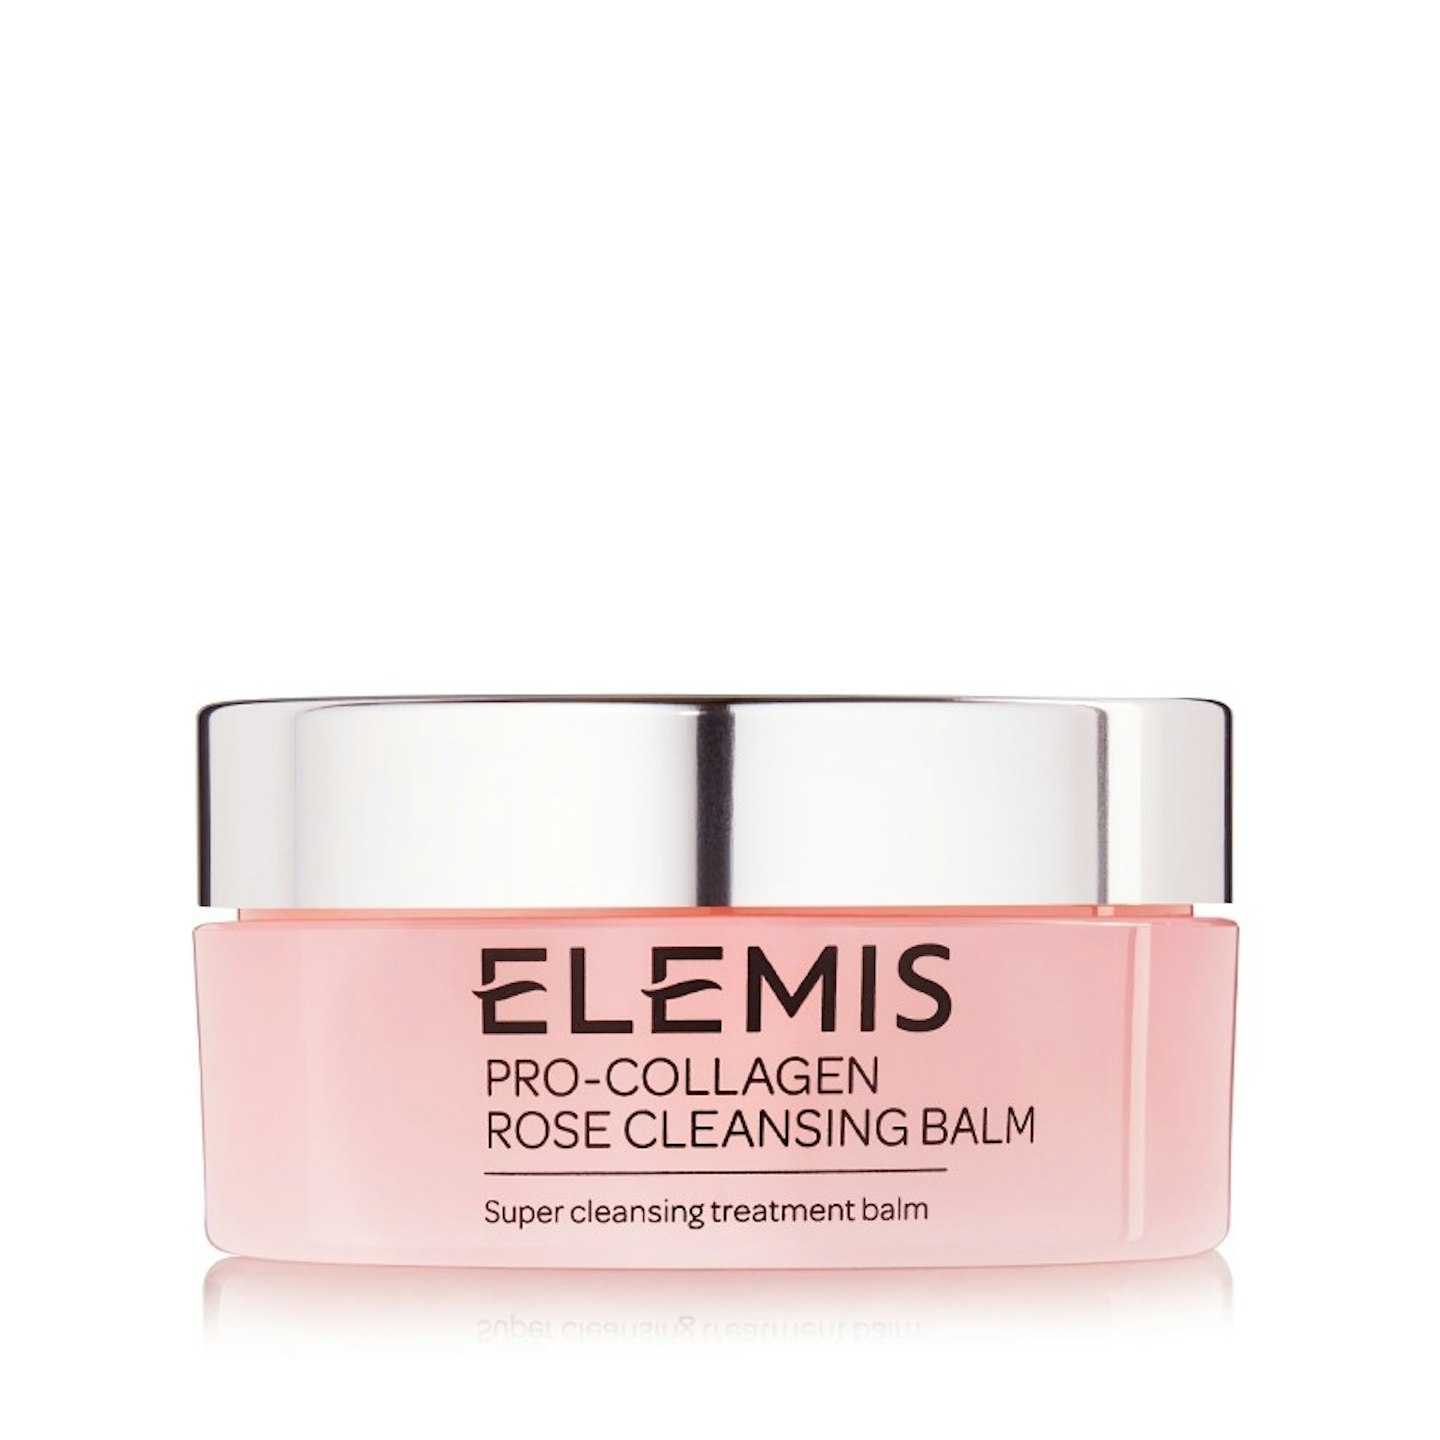 Elemis Pro-Collagen Rose Cleansing Balm, £44